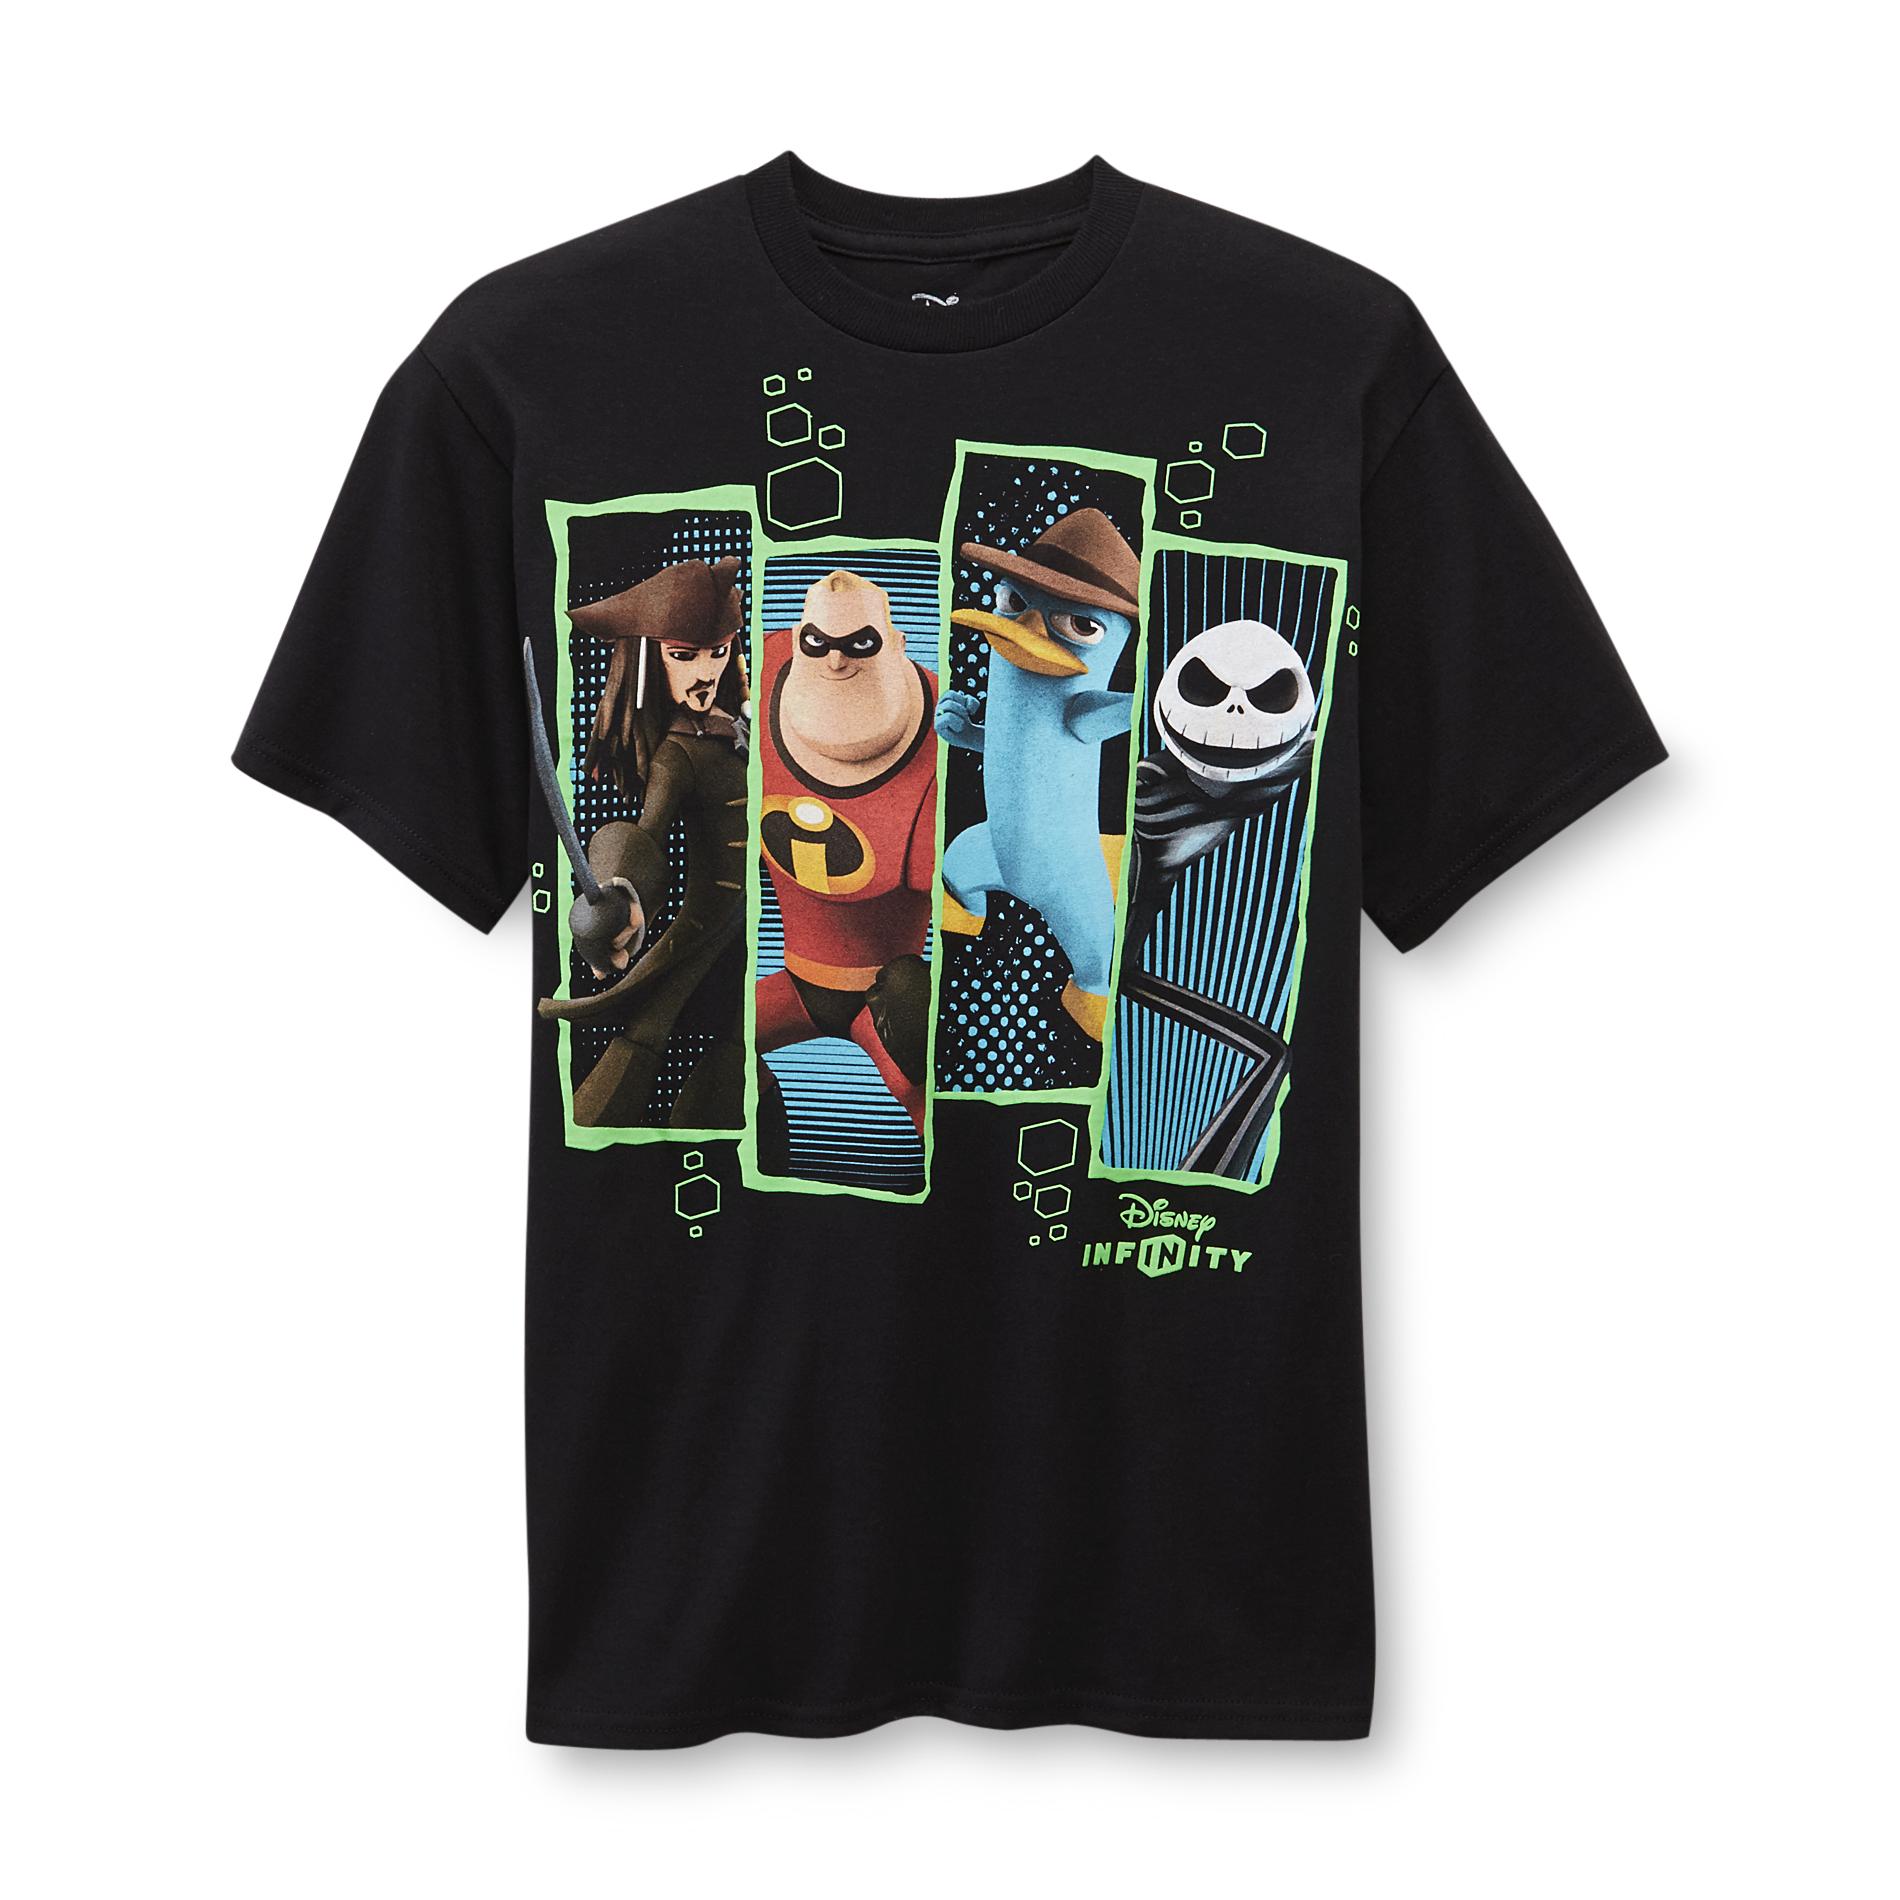 Disney Infinity Boy's Graphic T-Shirt - Video Game